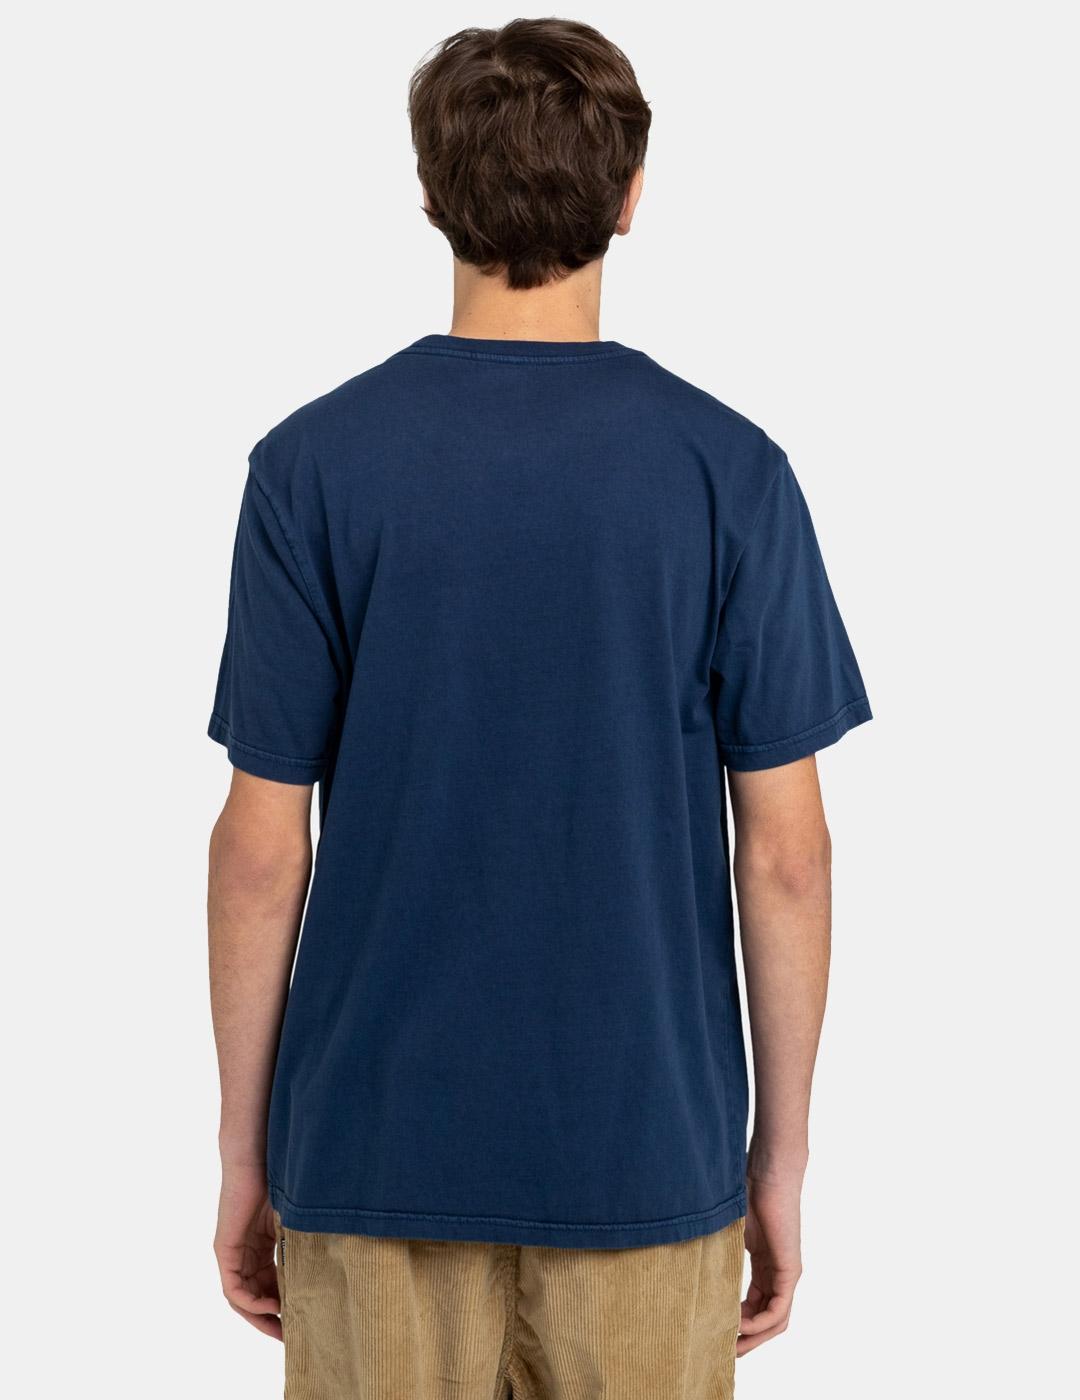 Camiseta ELEMENT BASIC POCKET PIGMENT - Naval Academy